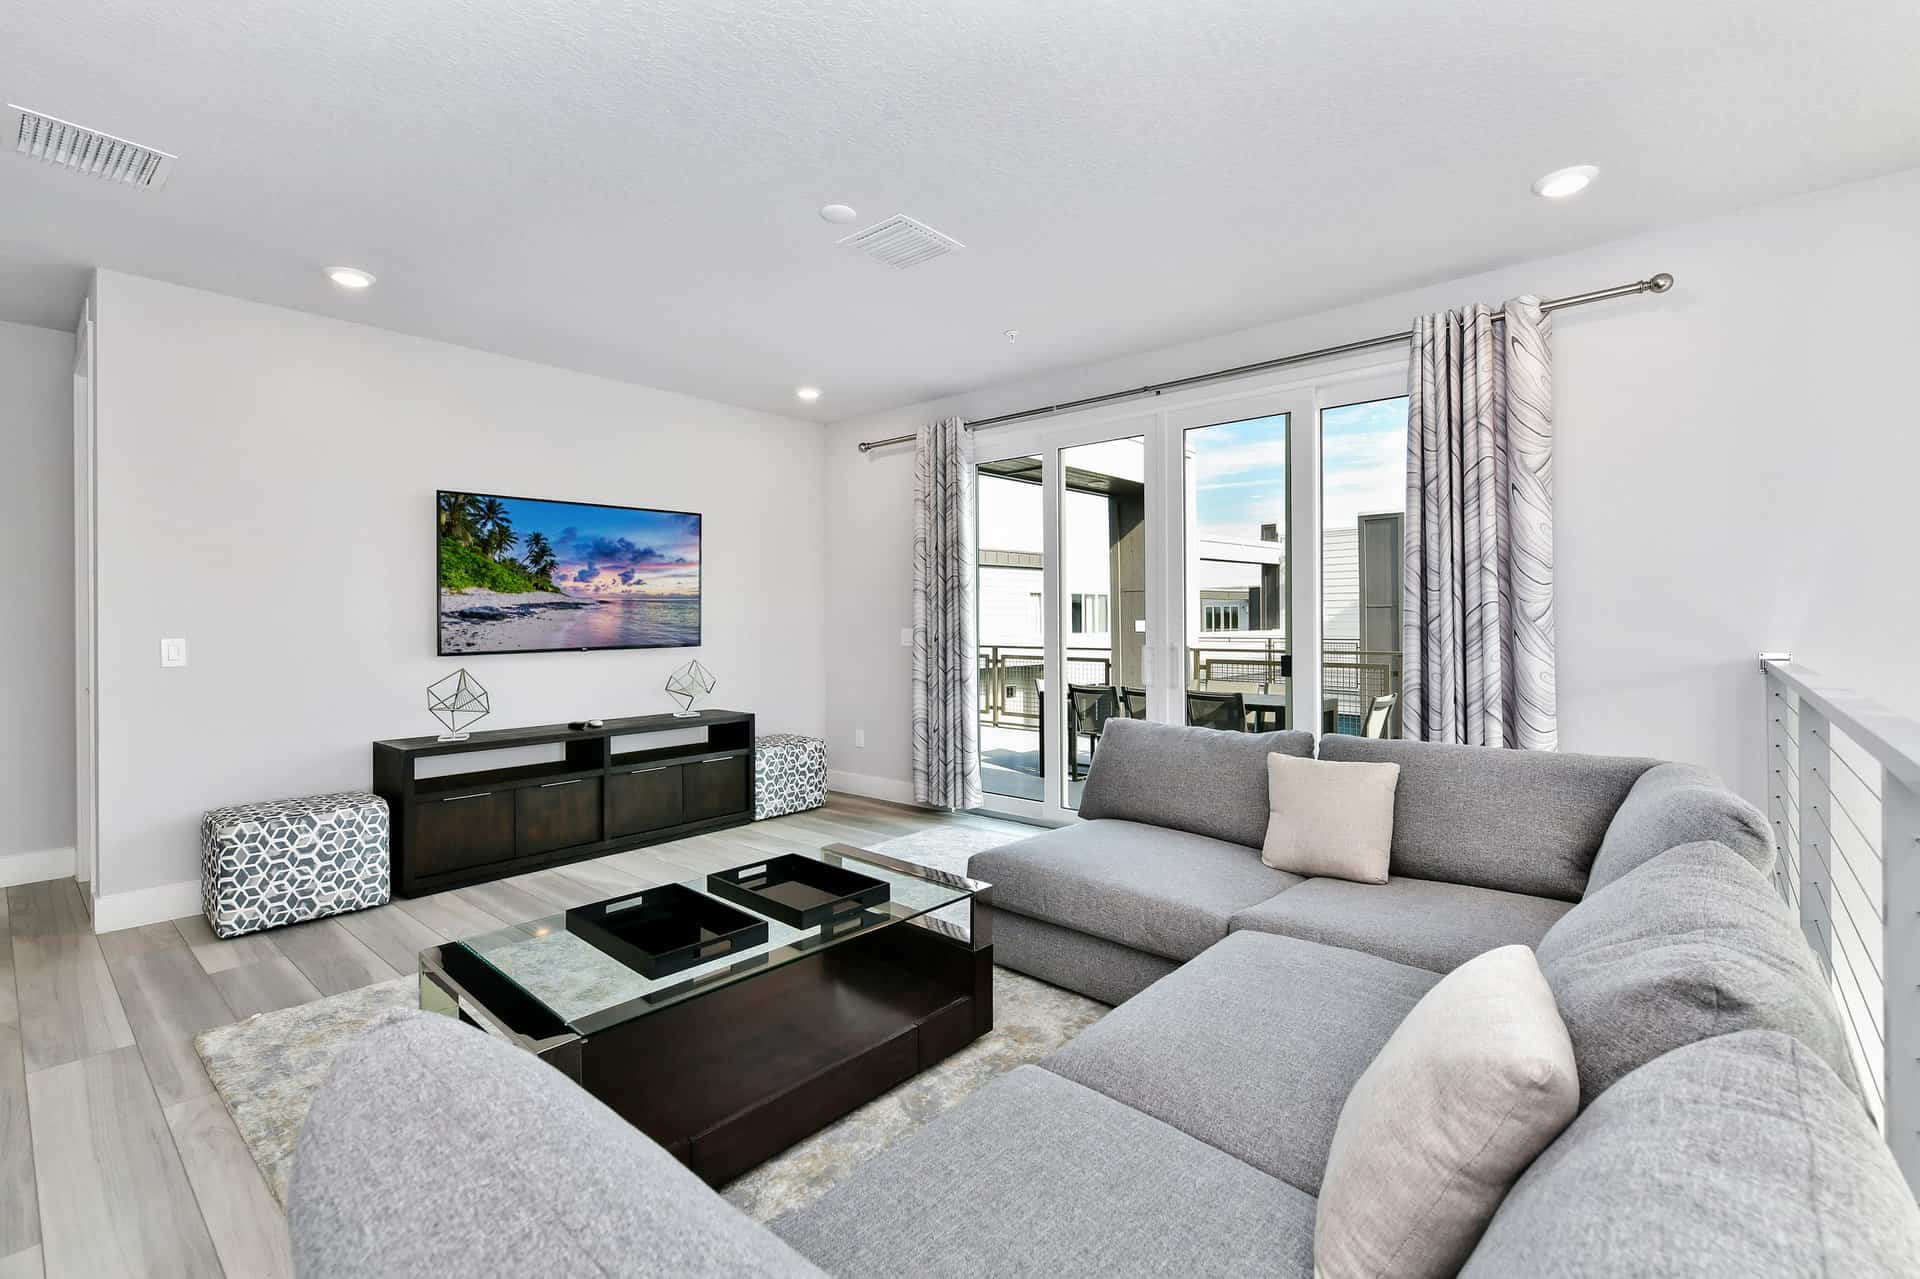 Spectrum Resort Orlando condo loft with sofa, TV, and access to outdoor terrace